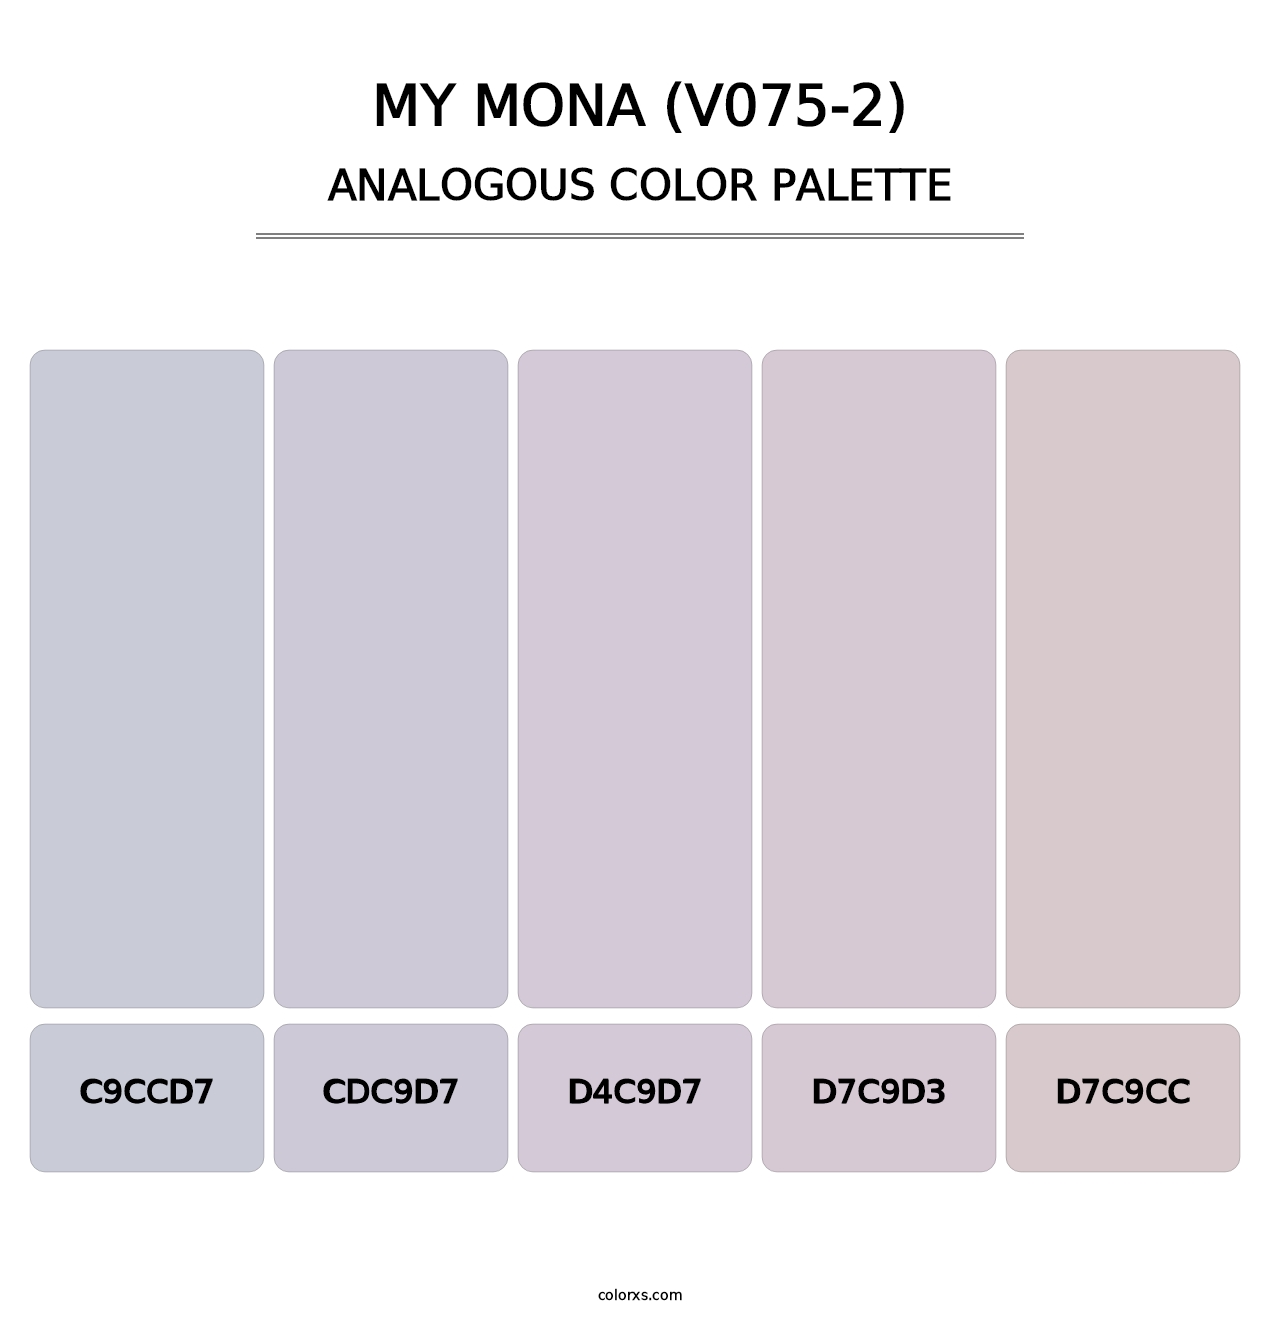 My Mona (V075-2) - Analogous Color Palette